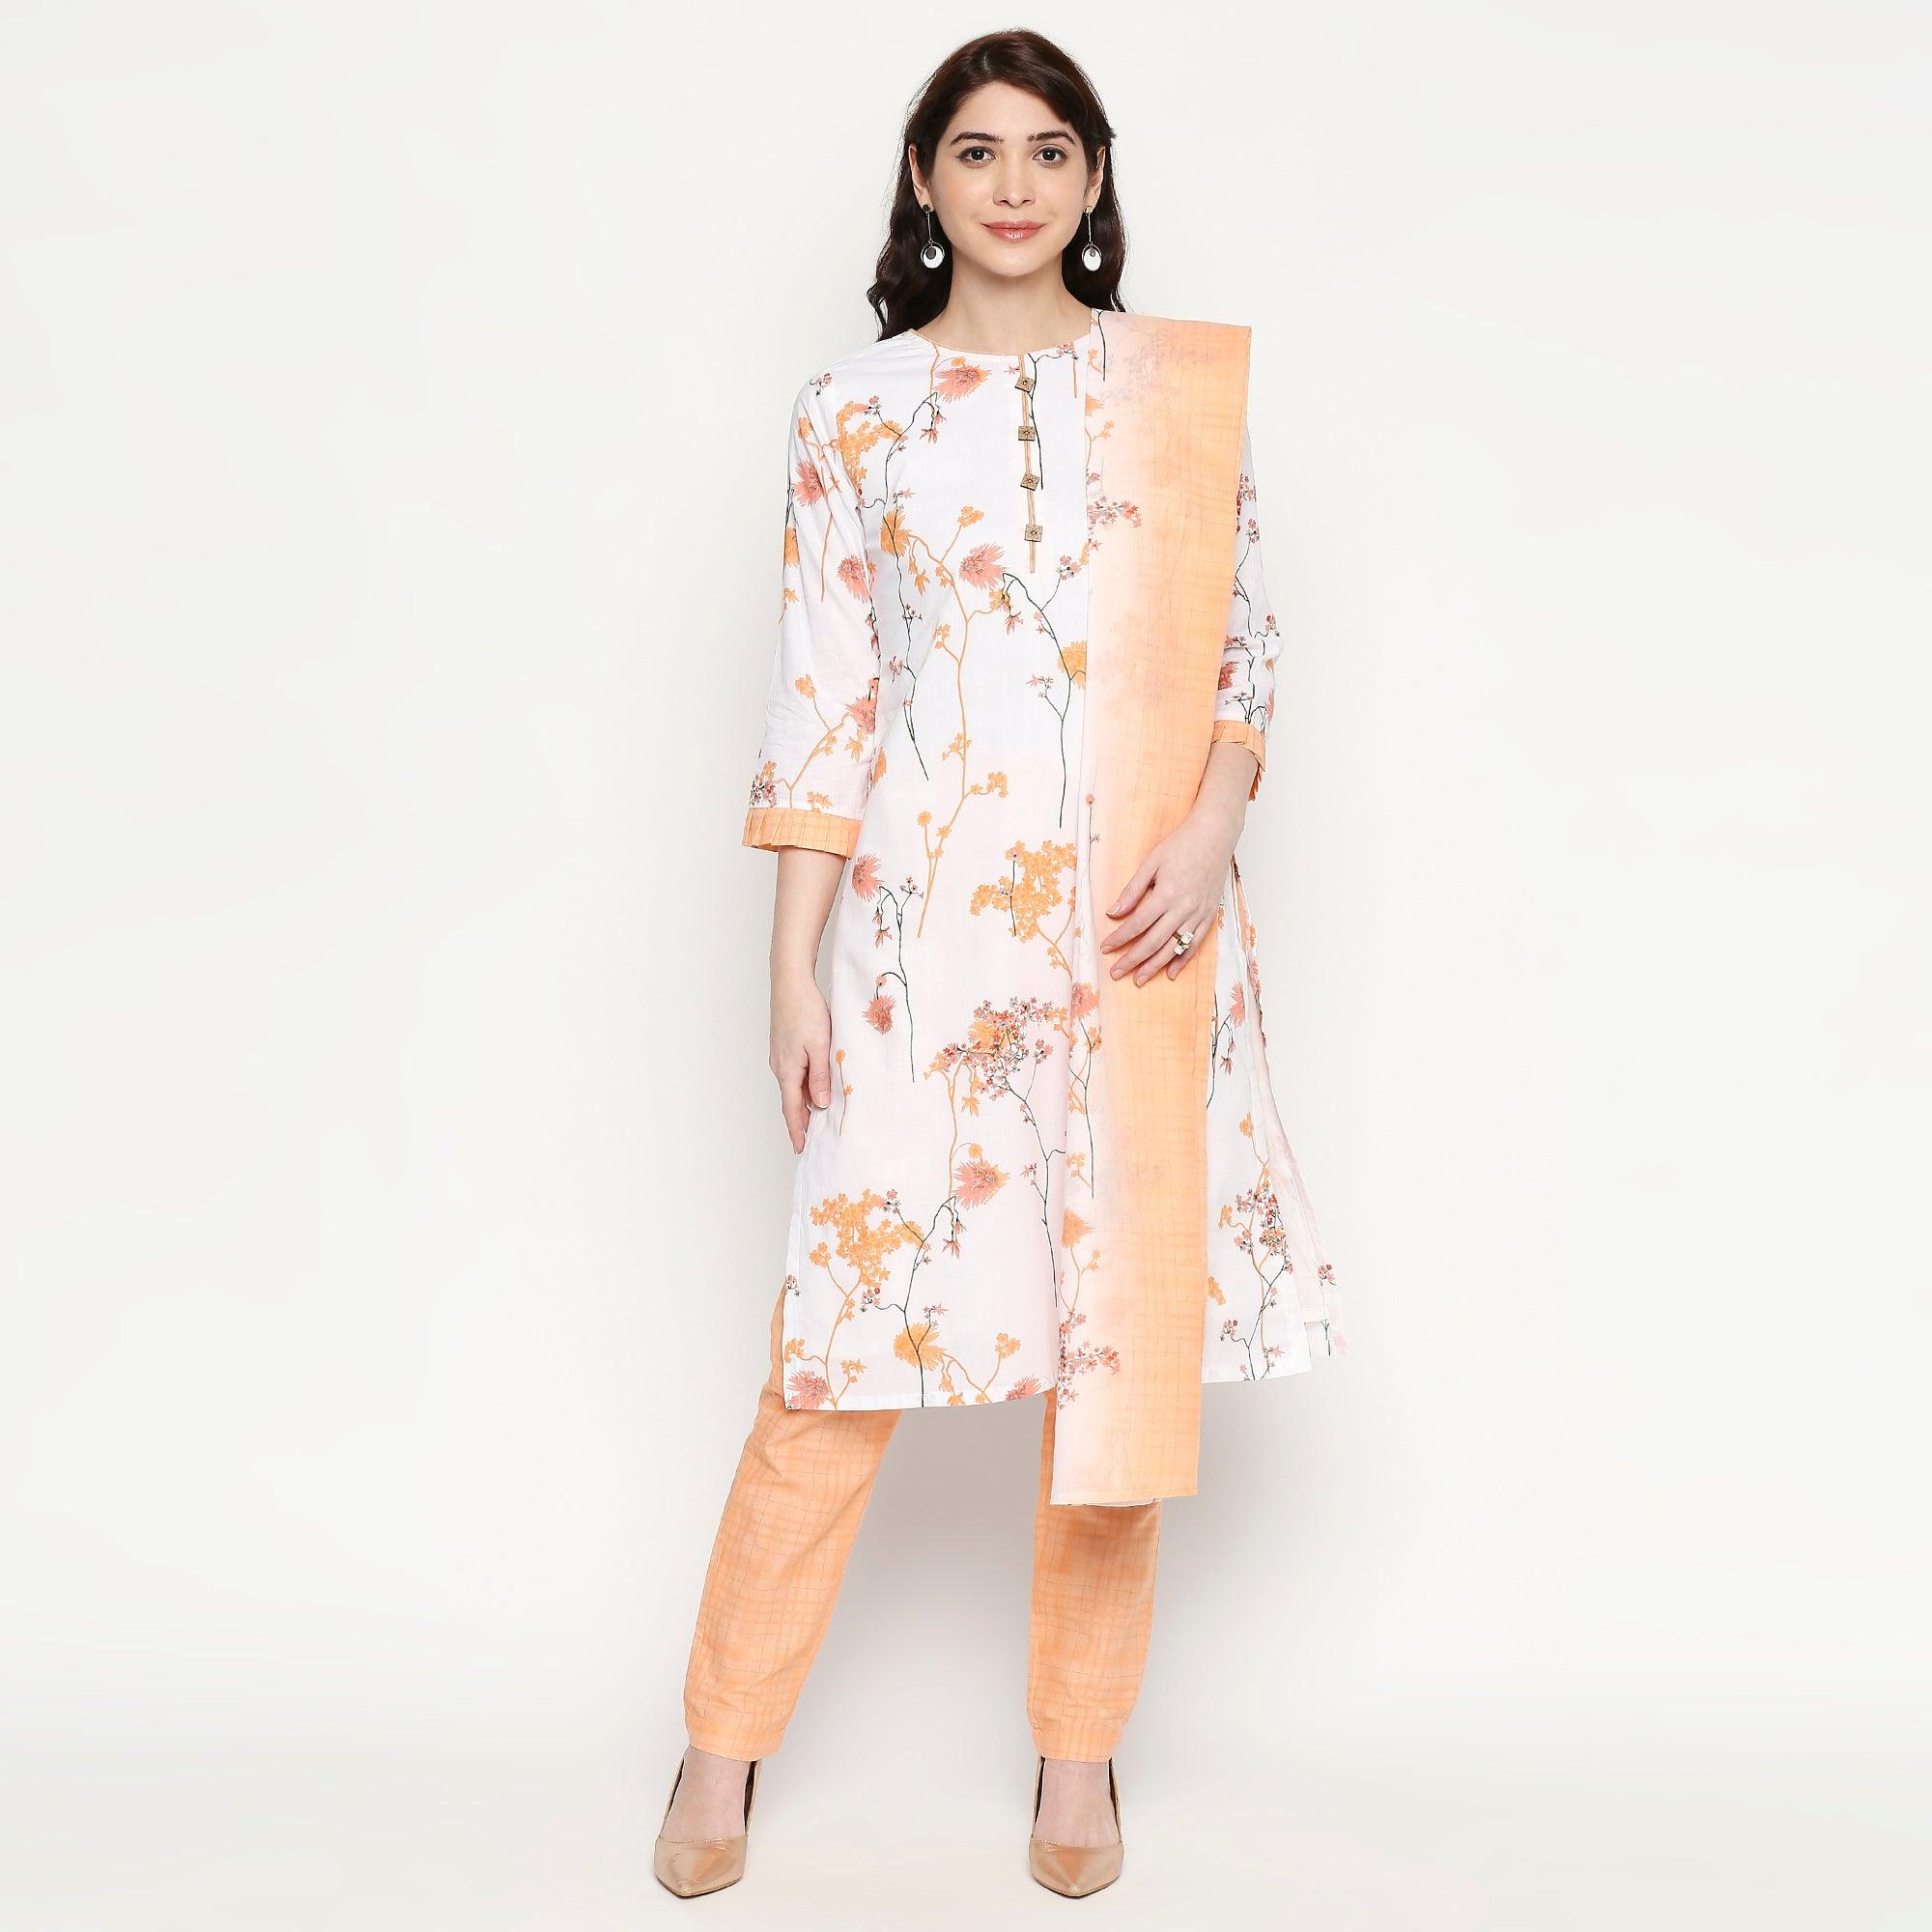 Charming White-Orange Colored Casual Wear Floral Printed Cotton Kurti-Pant Set With Dupatta - Peachmode